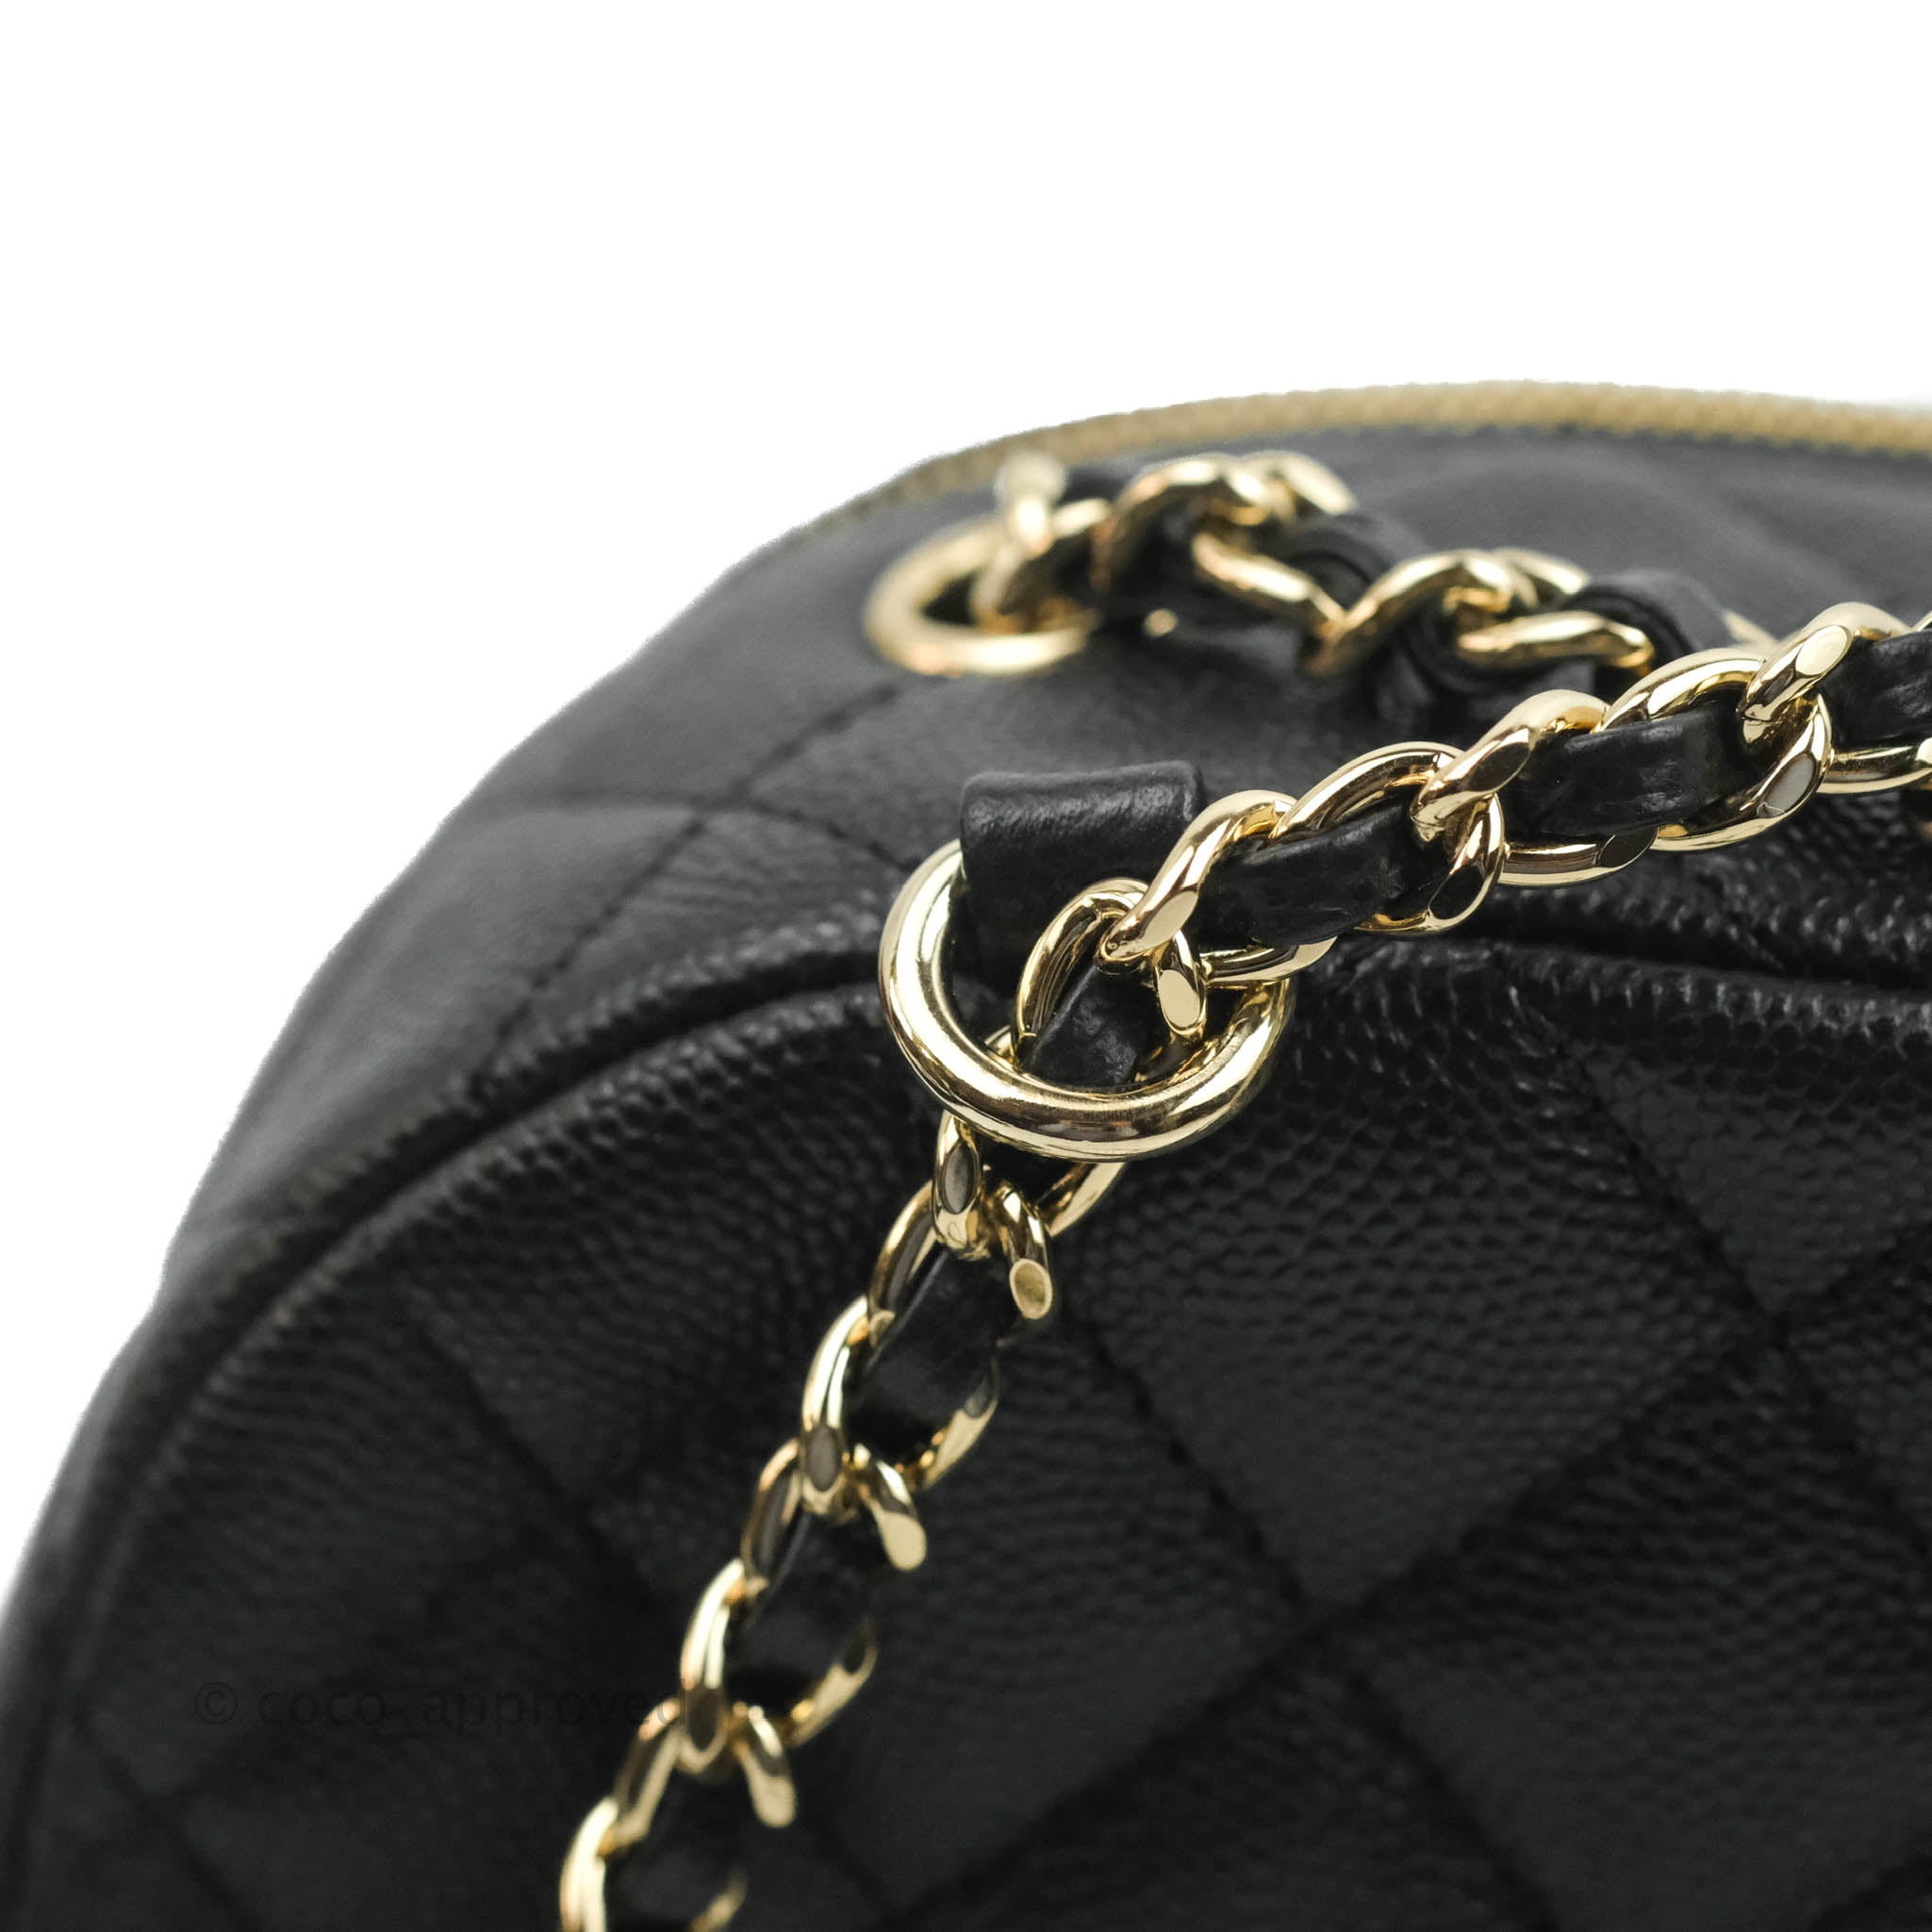 Chanel coco matelasse leather - Gem